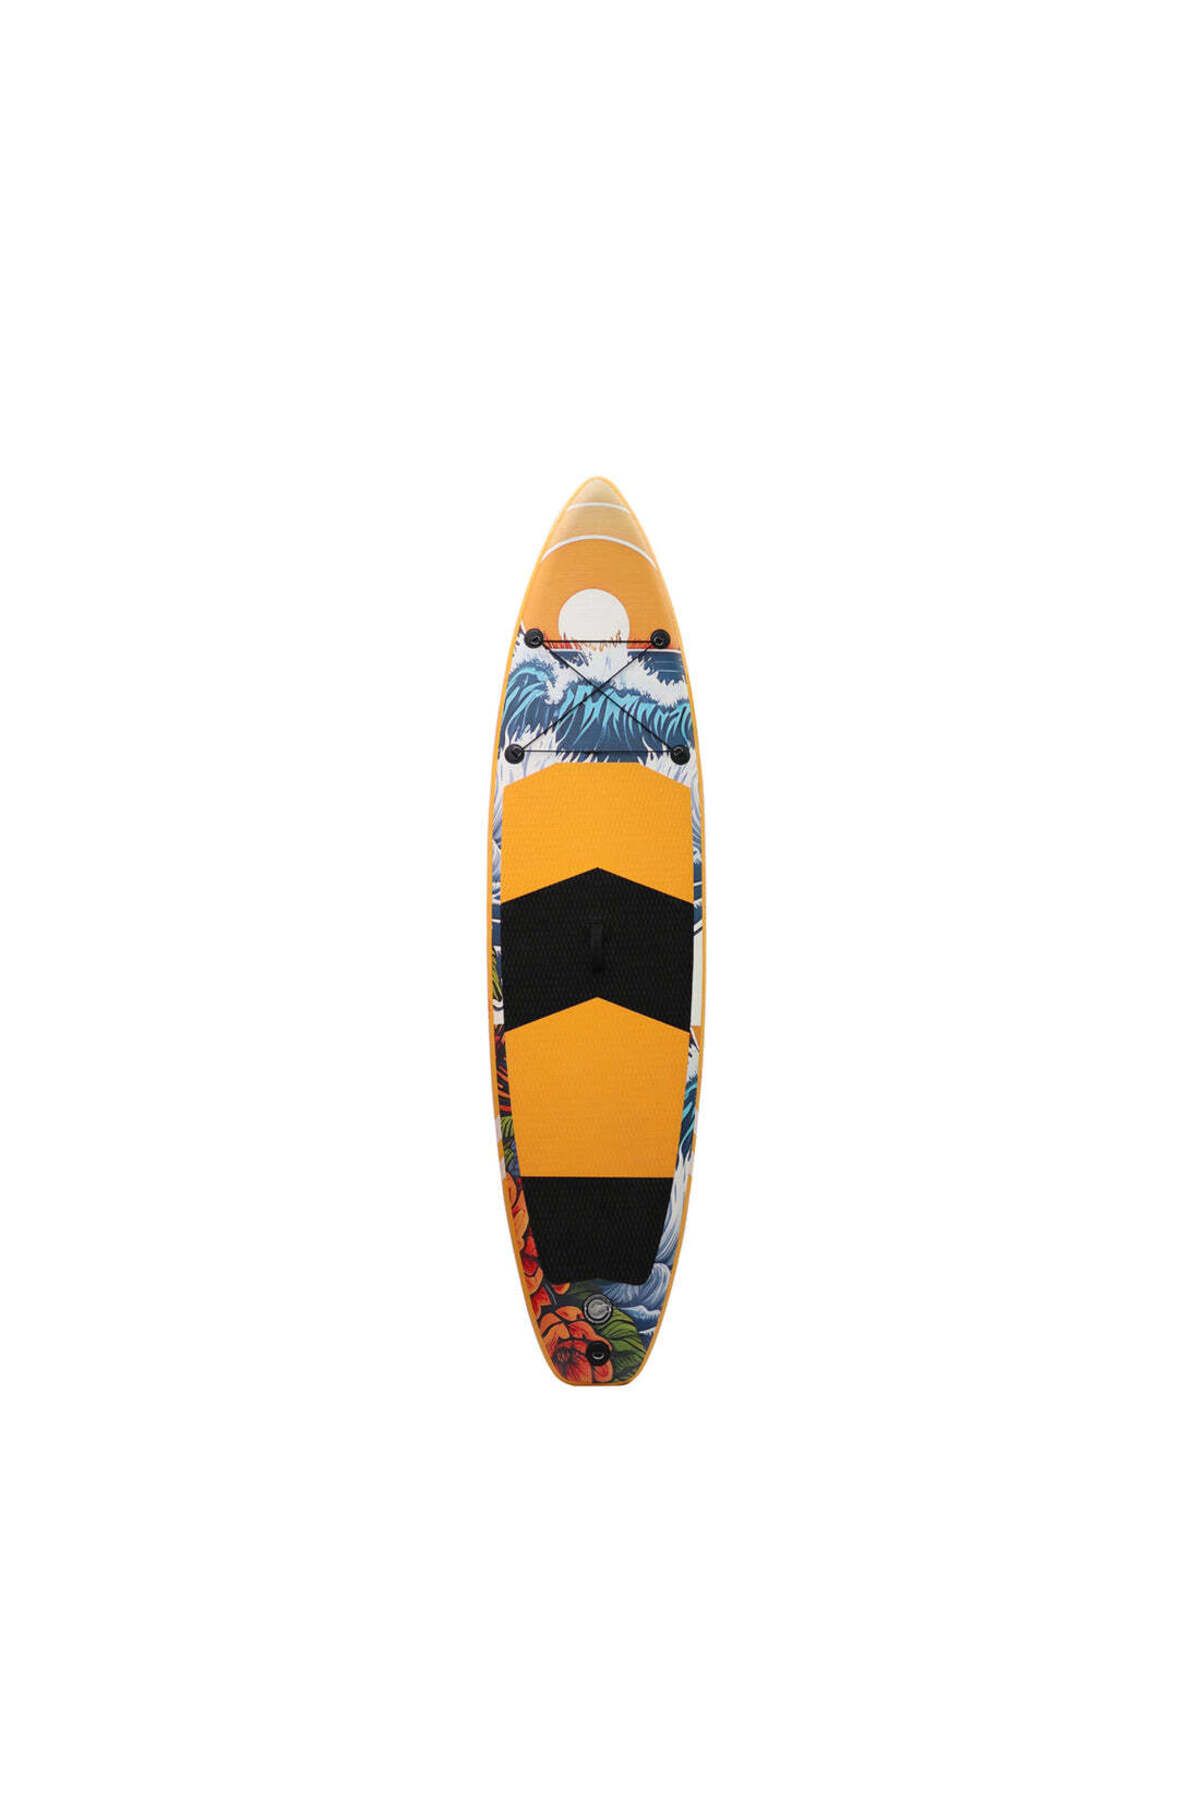 Greenmall Malibu Şişirilebilir Paddle Board - SUP 305 cm